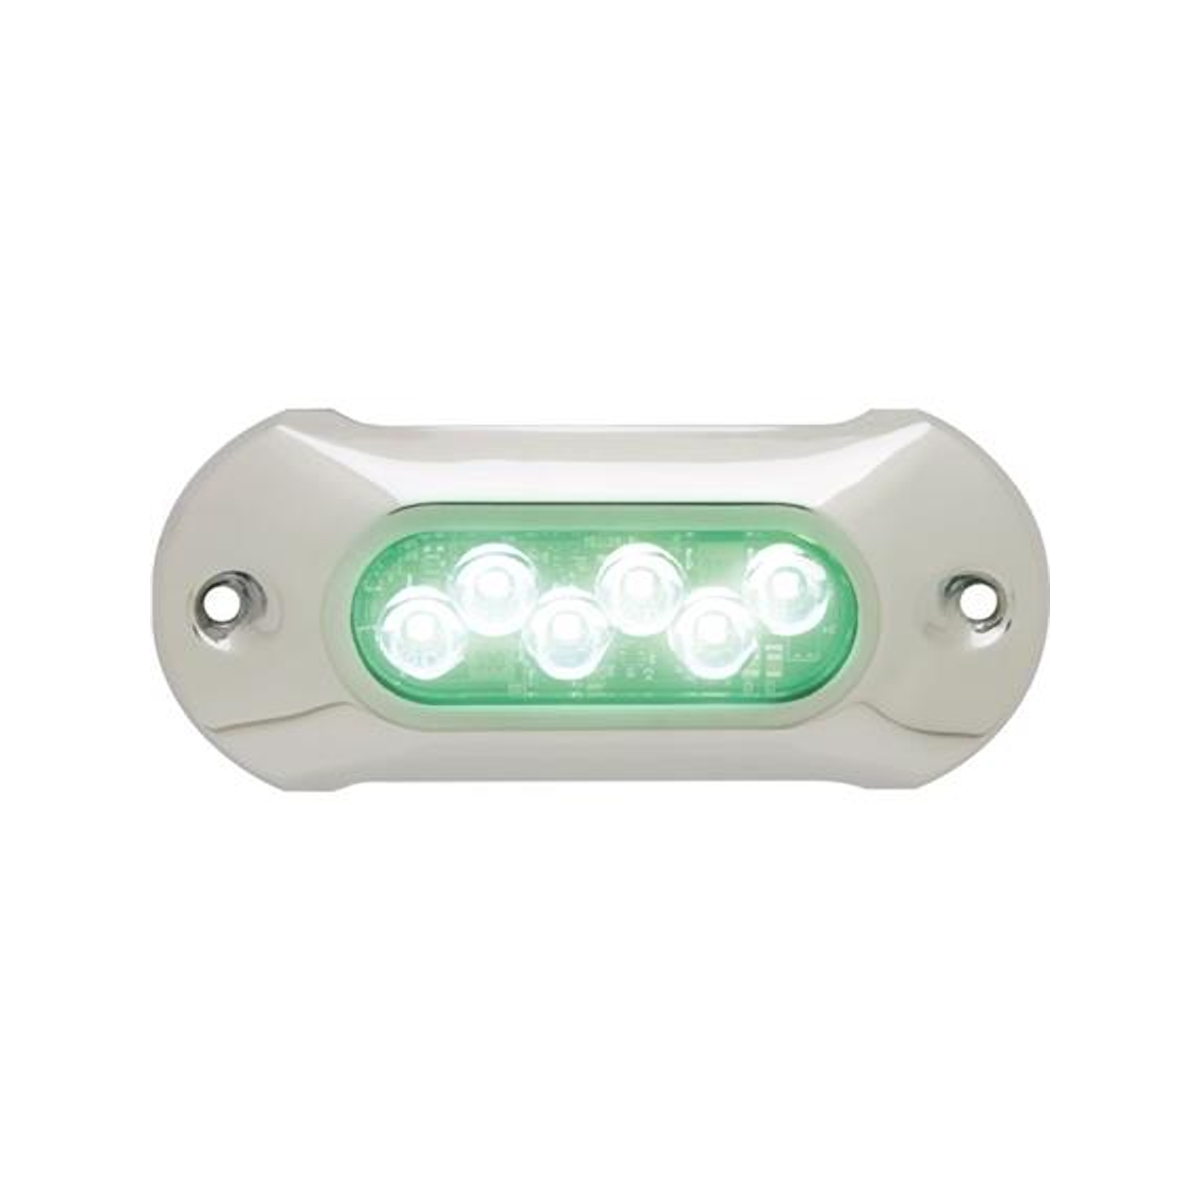 Attwood onderwaterverlichting LED 5.0 groen